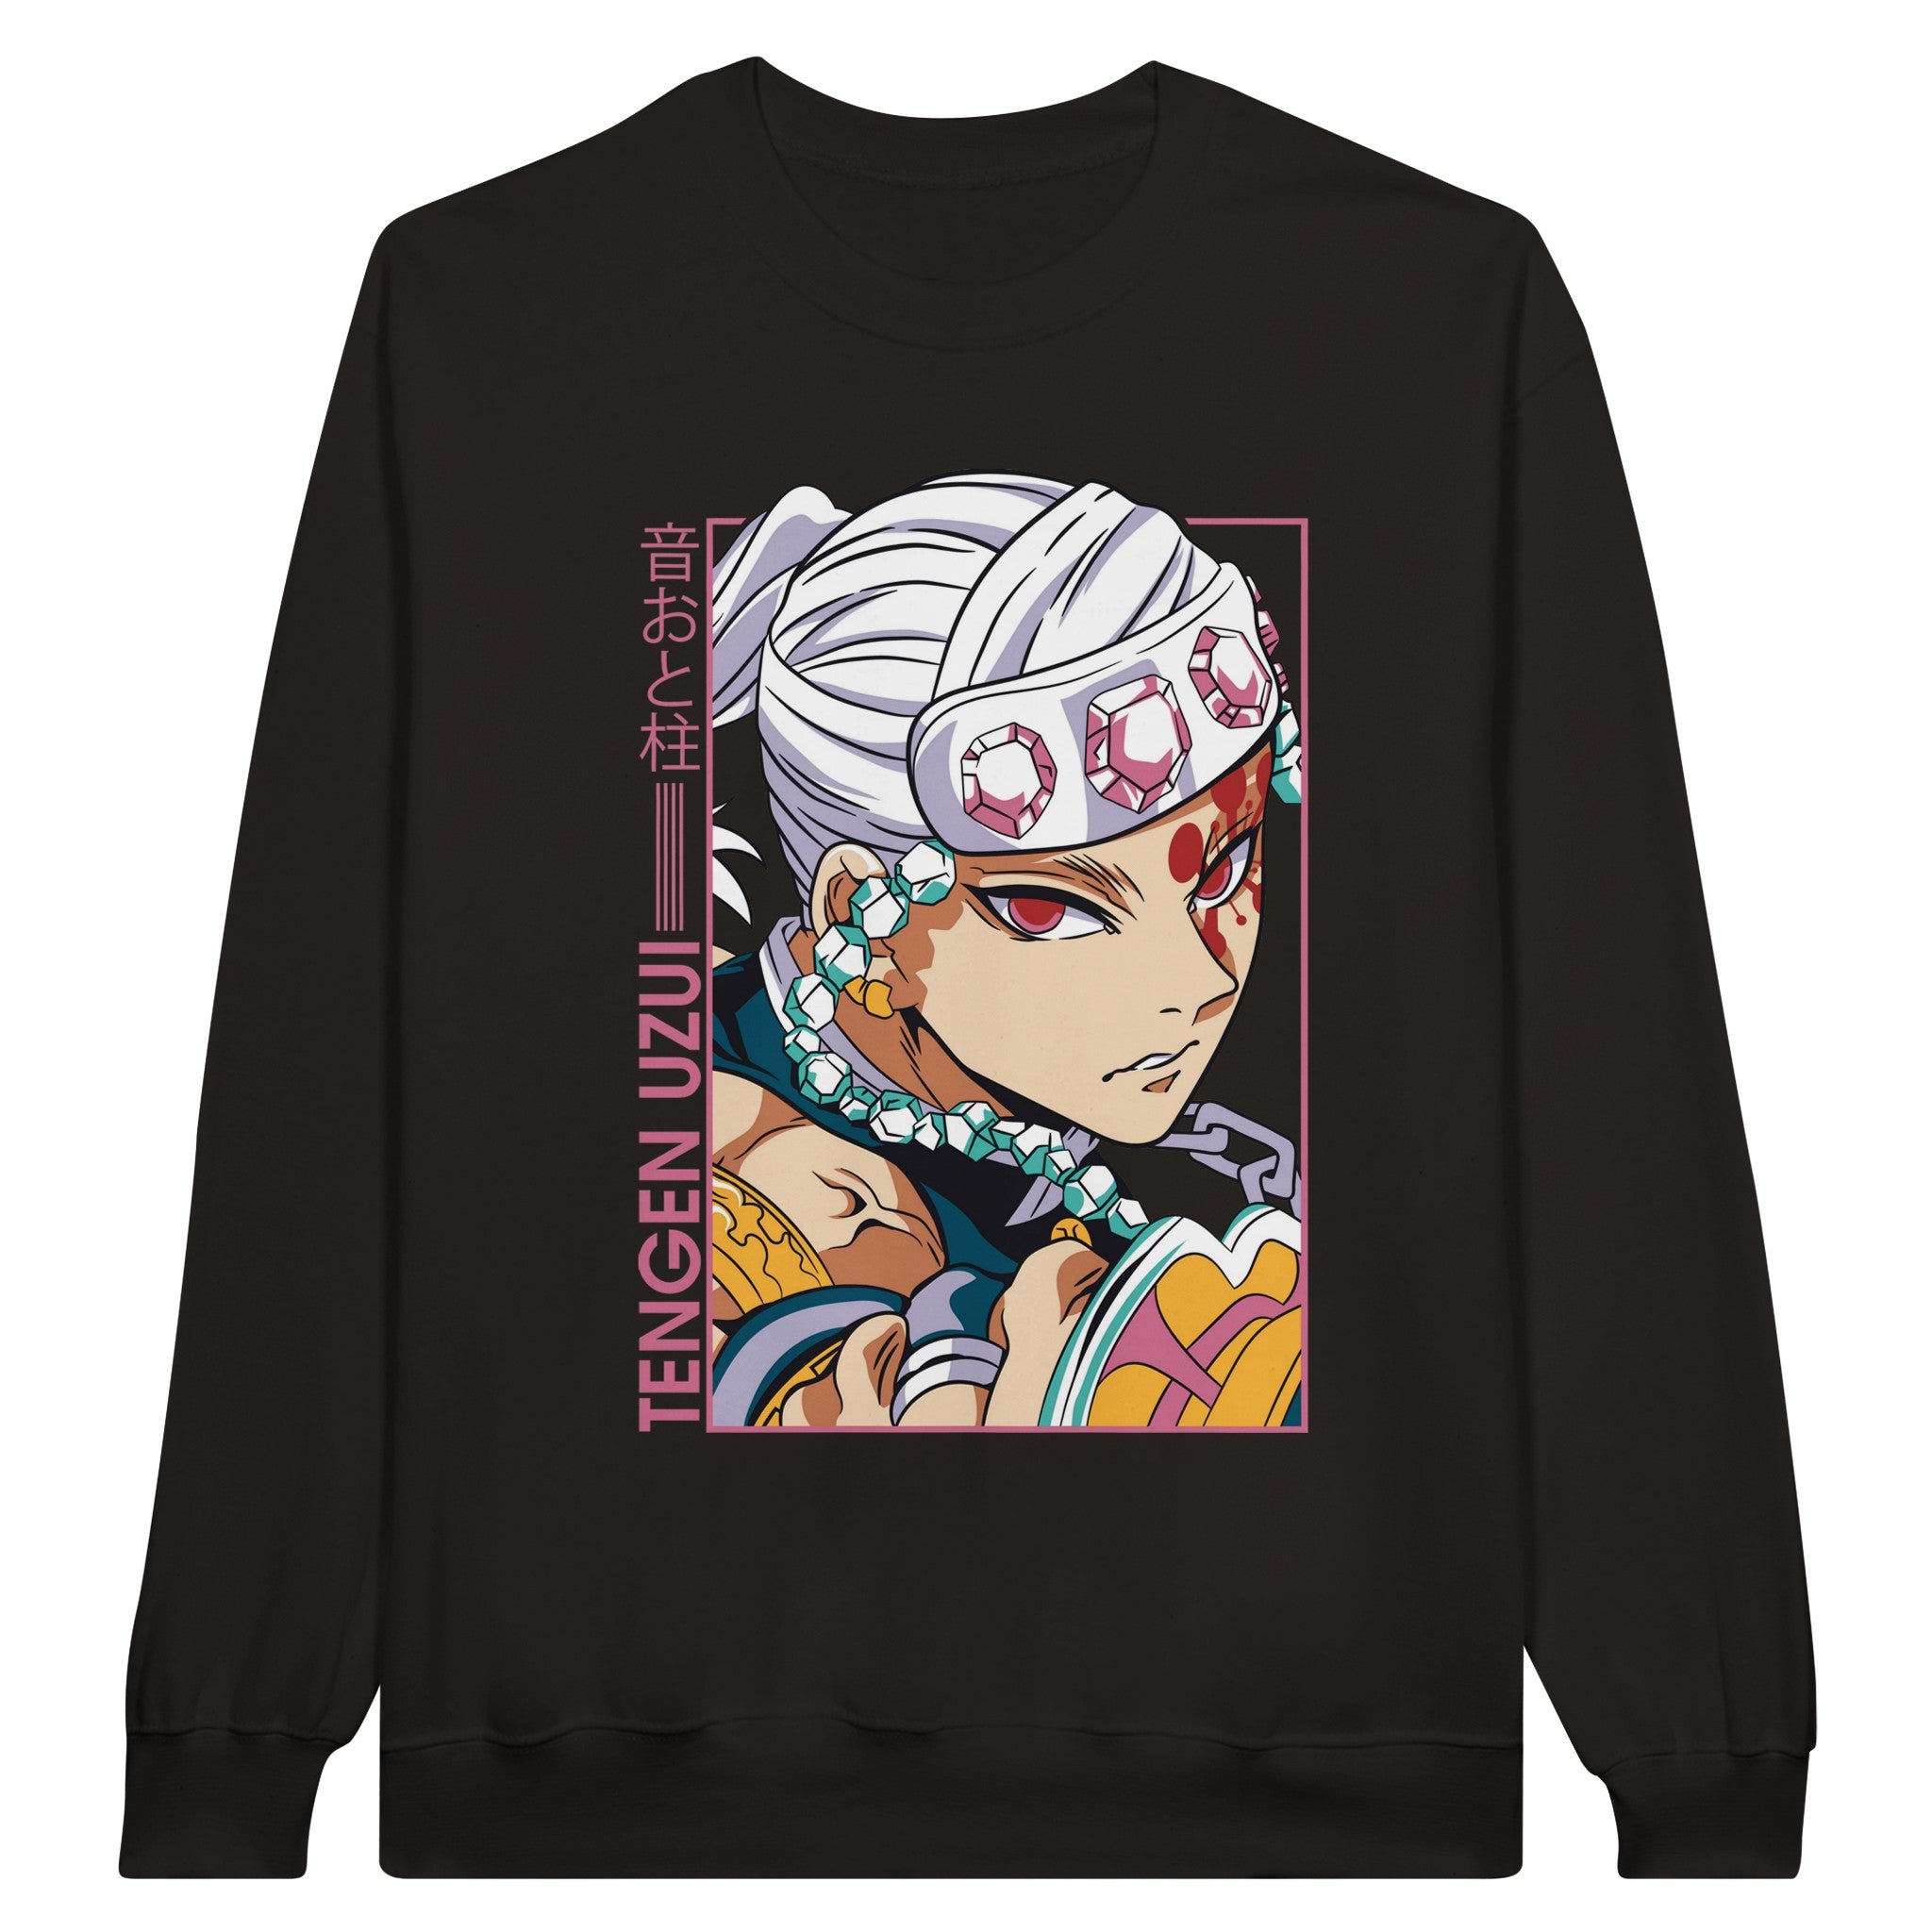 shop and buy demon slayer anime clothing tengen sweatshirt/longsleeve/jumper